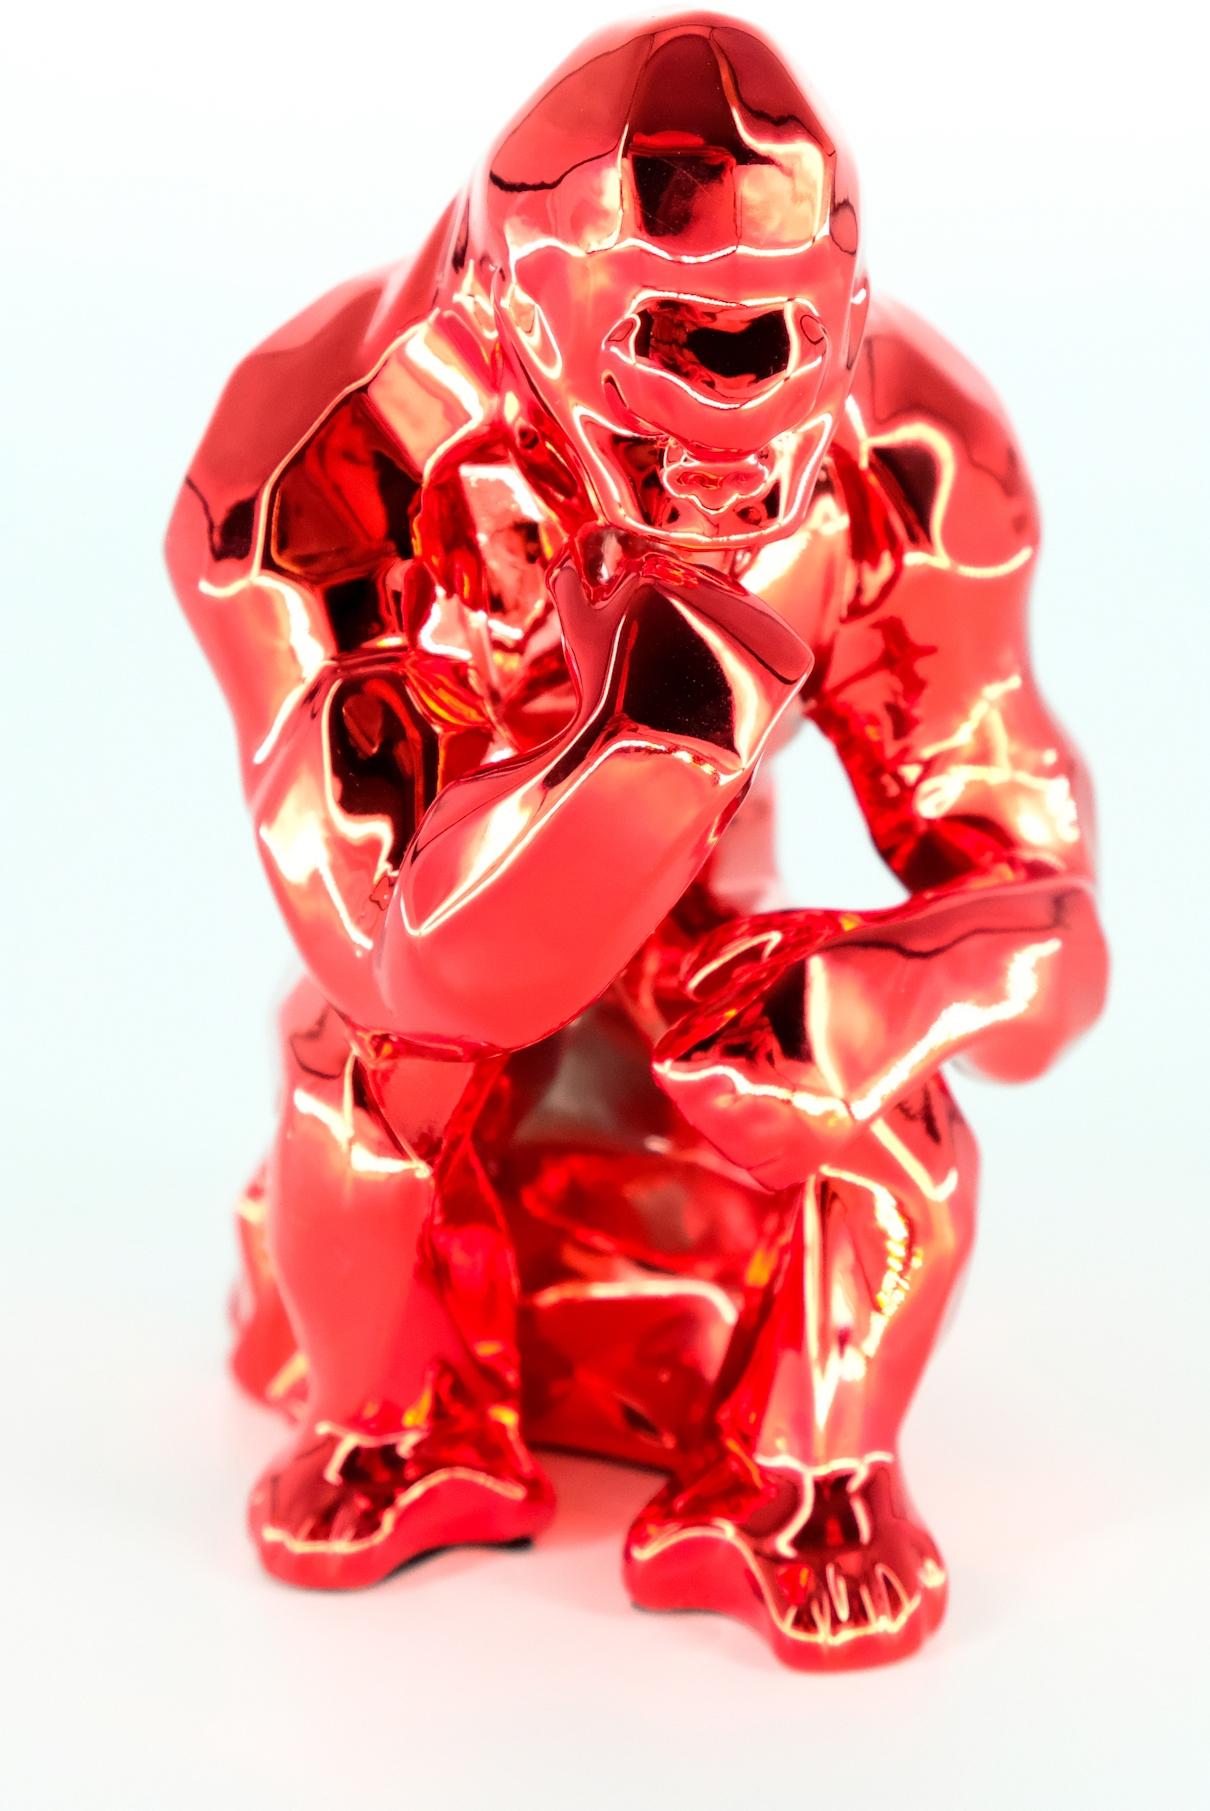 Figurative Sculpture Richard Orlinski - Thinker Spirit (édition rouge) - Sculpture dans sa boîte d'origine avec certificat d'artiste